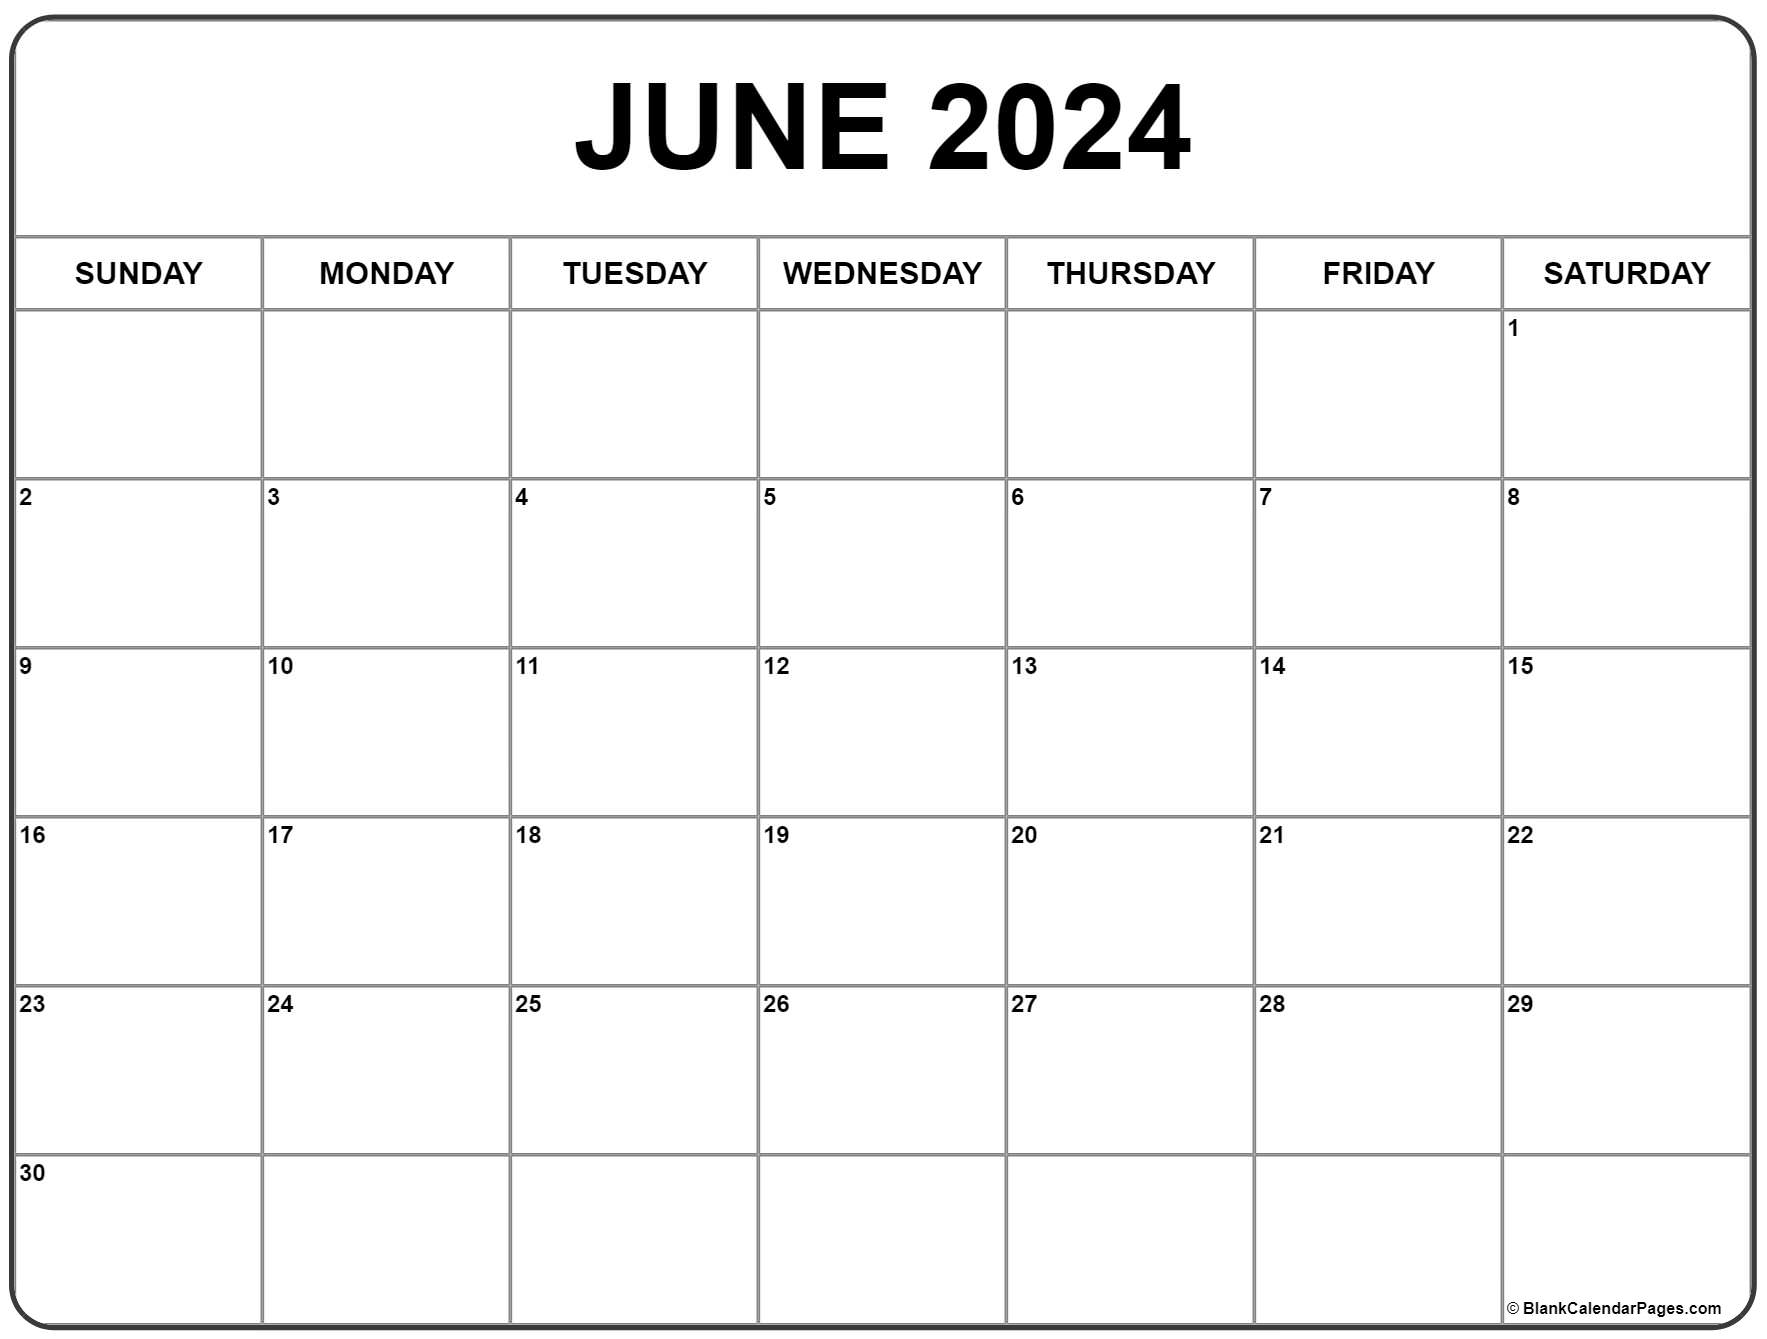 June 2024 Calendar | Free Printable Calendar for Free Printable Monthly Calendar 2024 June